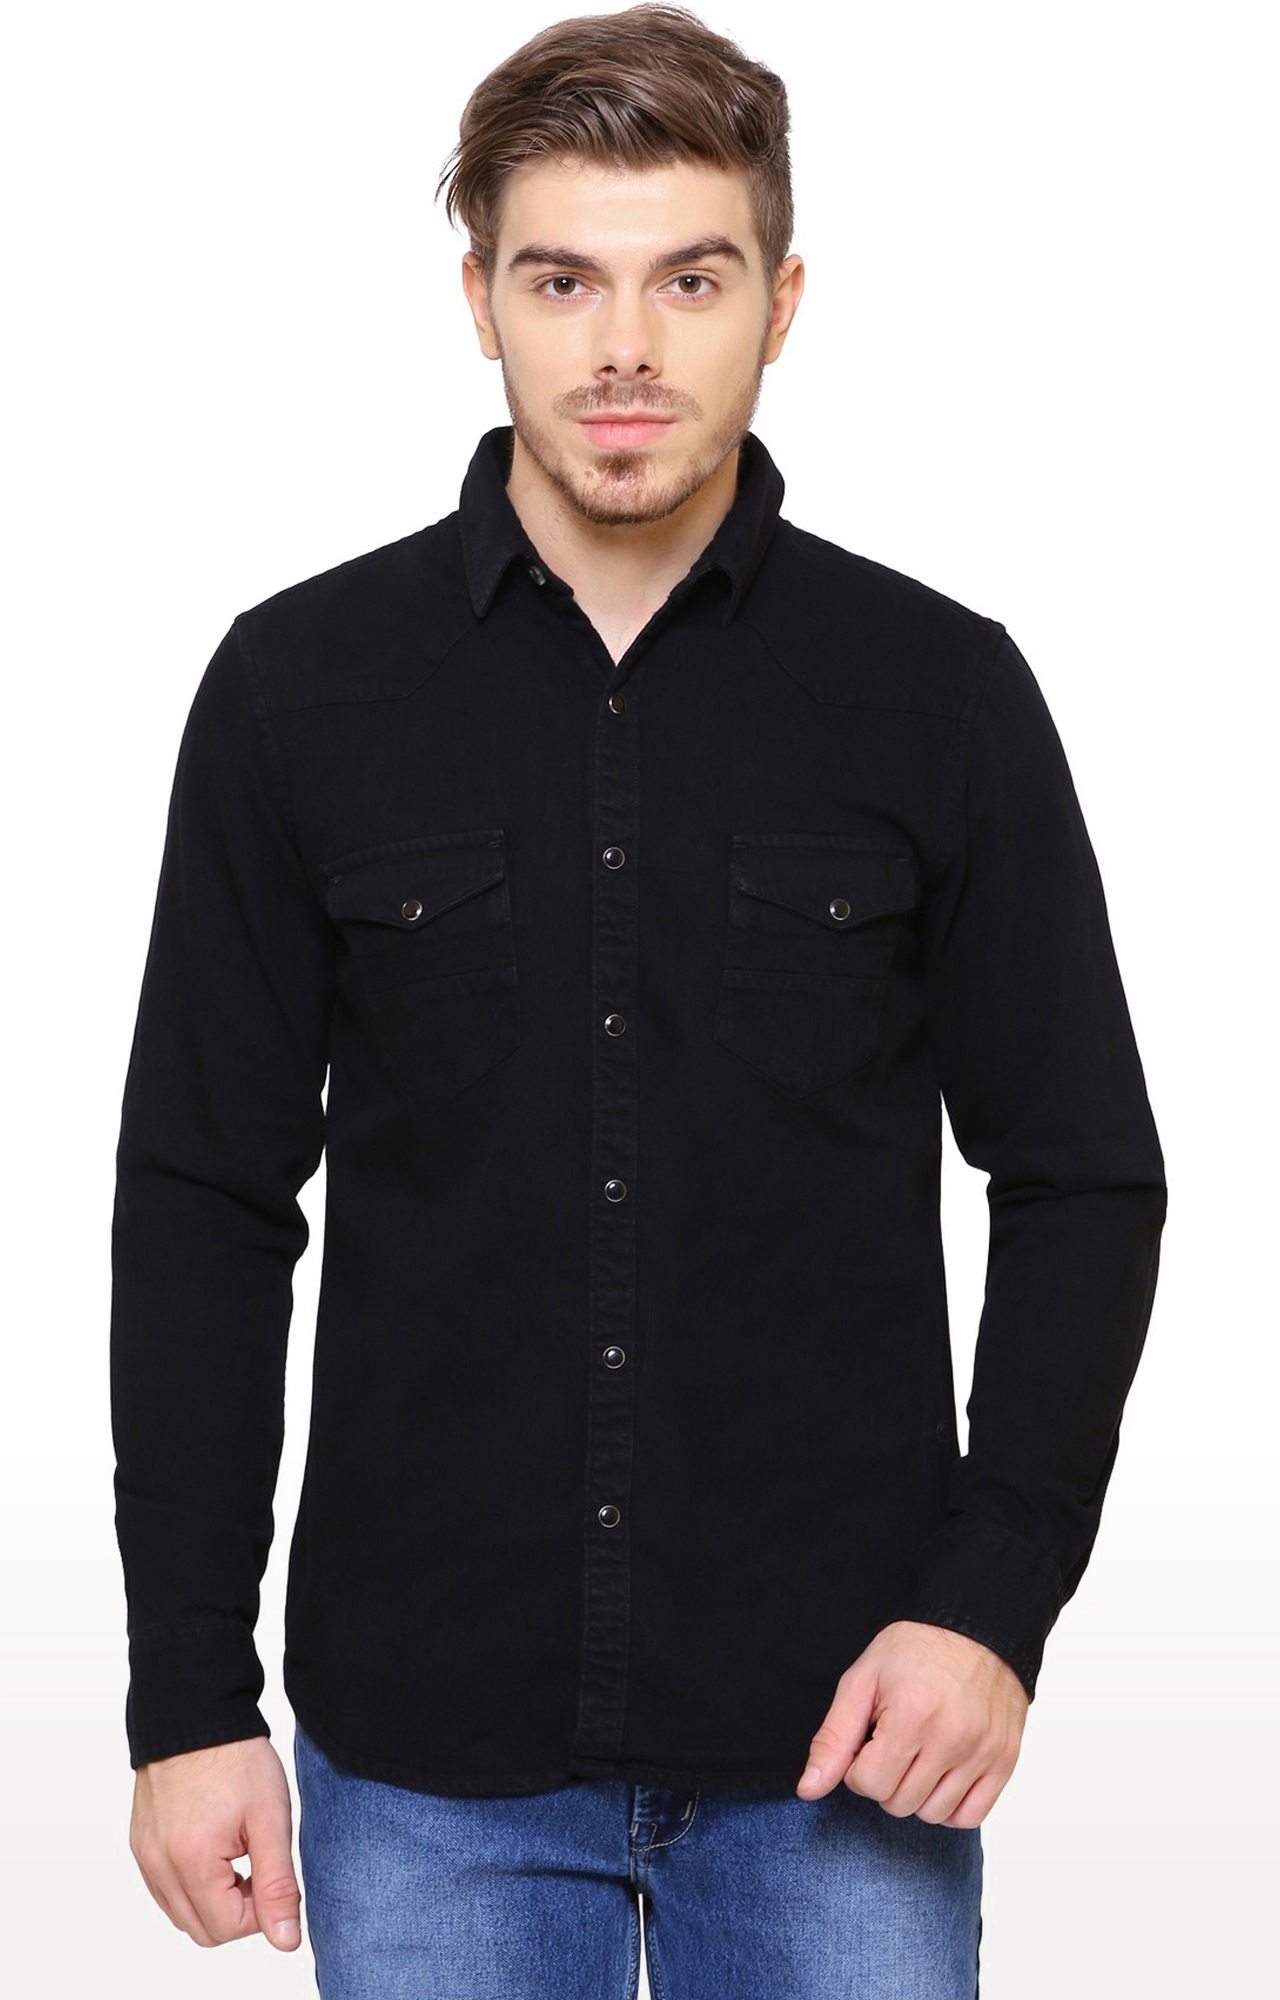 Southbay Men's Jet Black Casual Denim Shirt